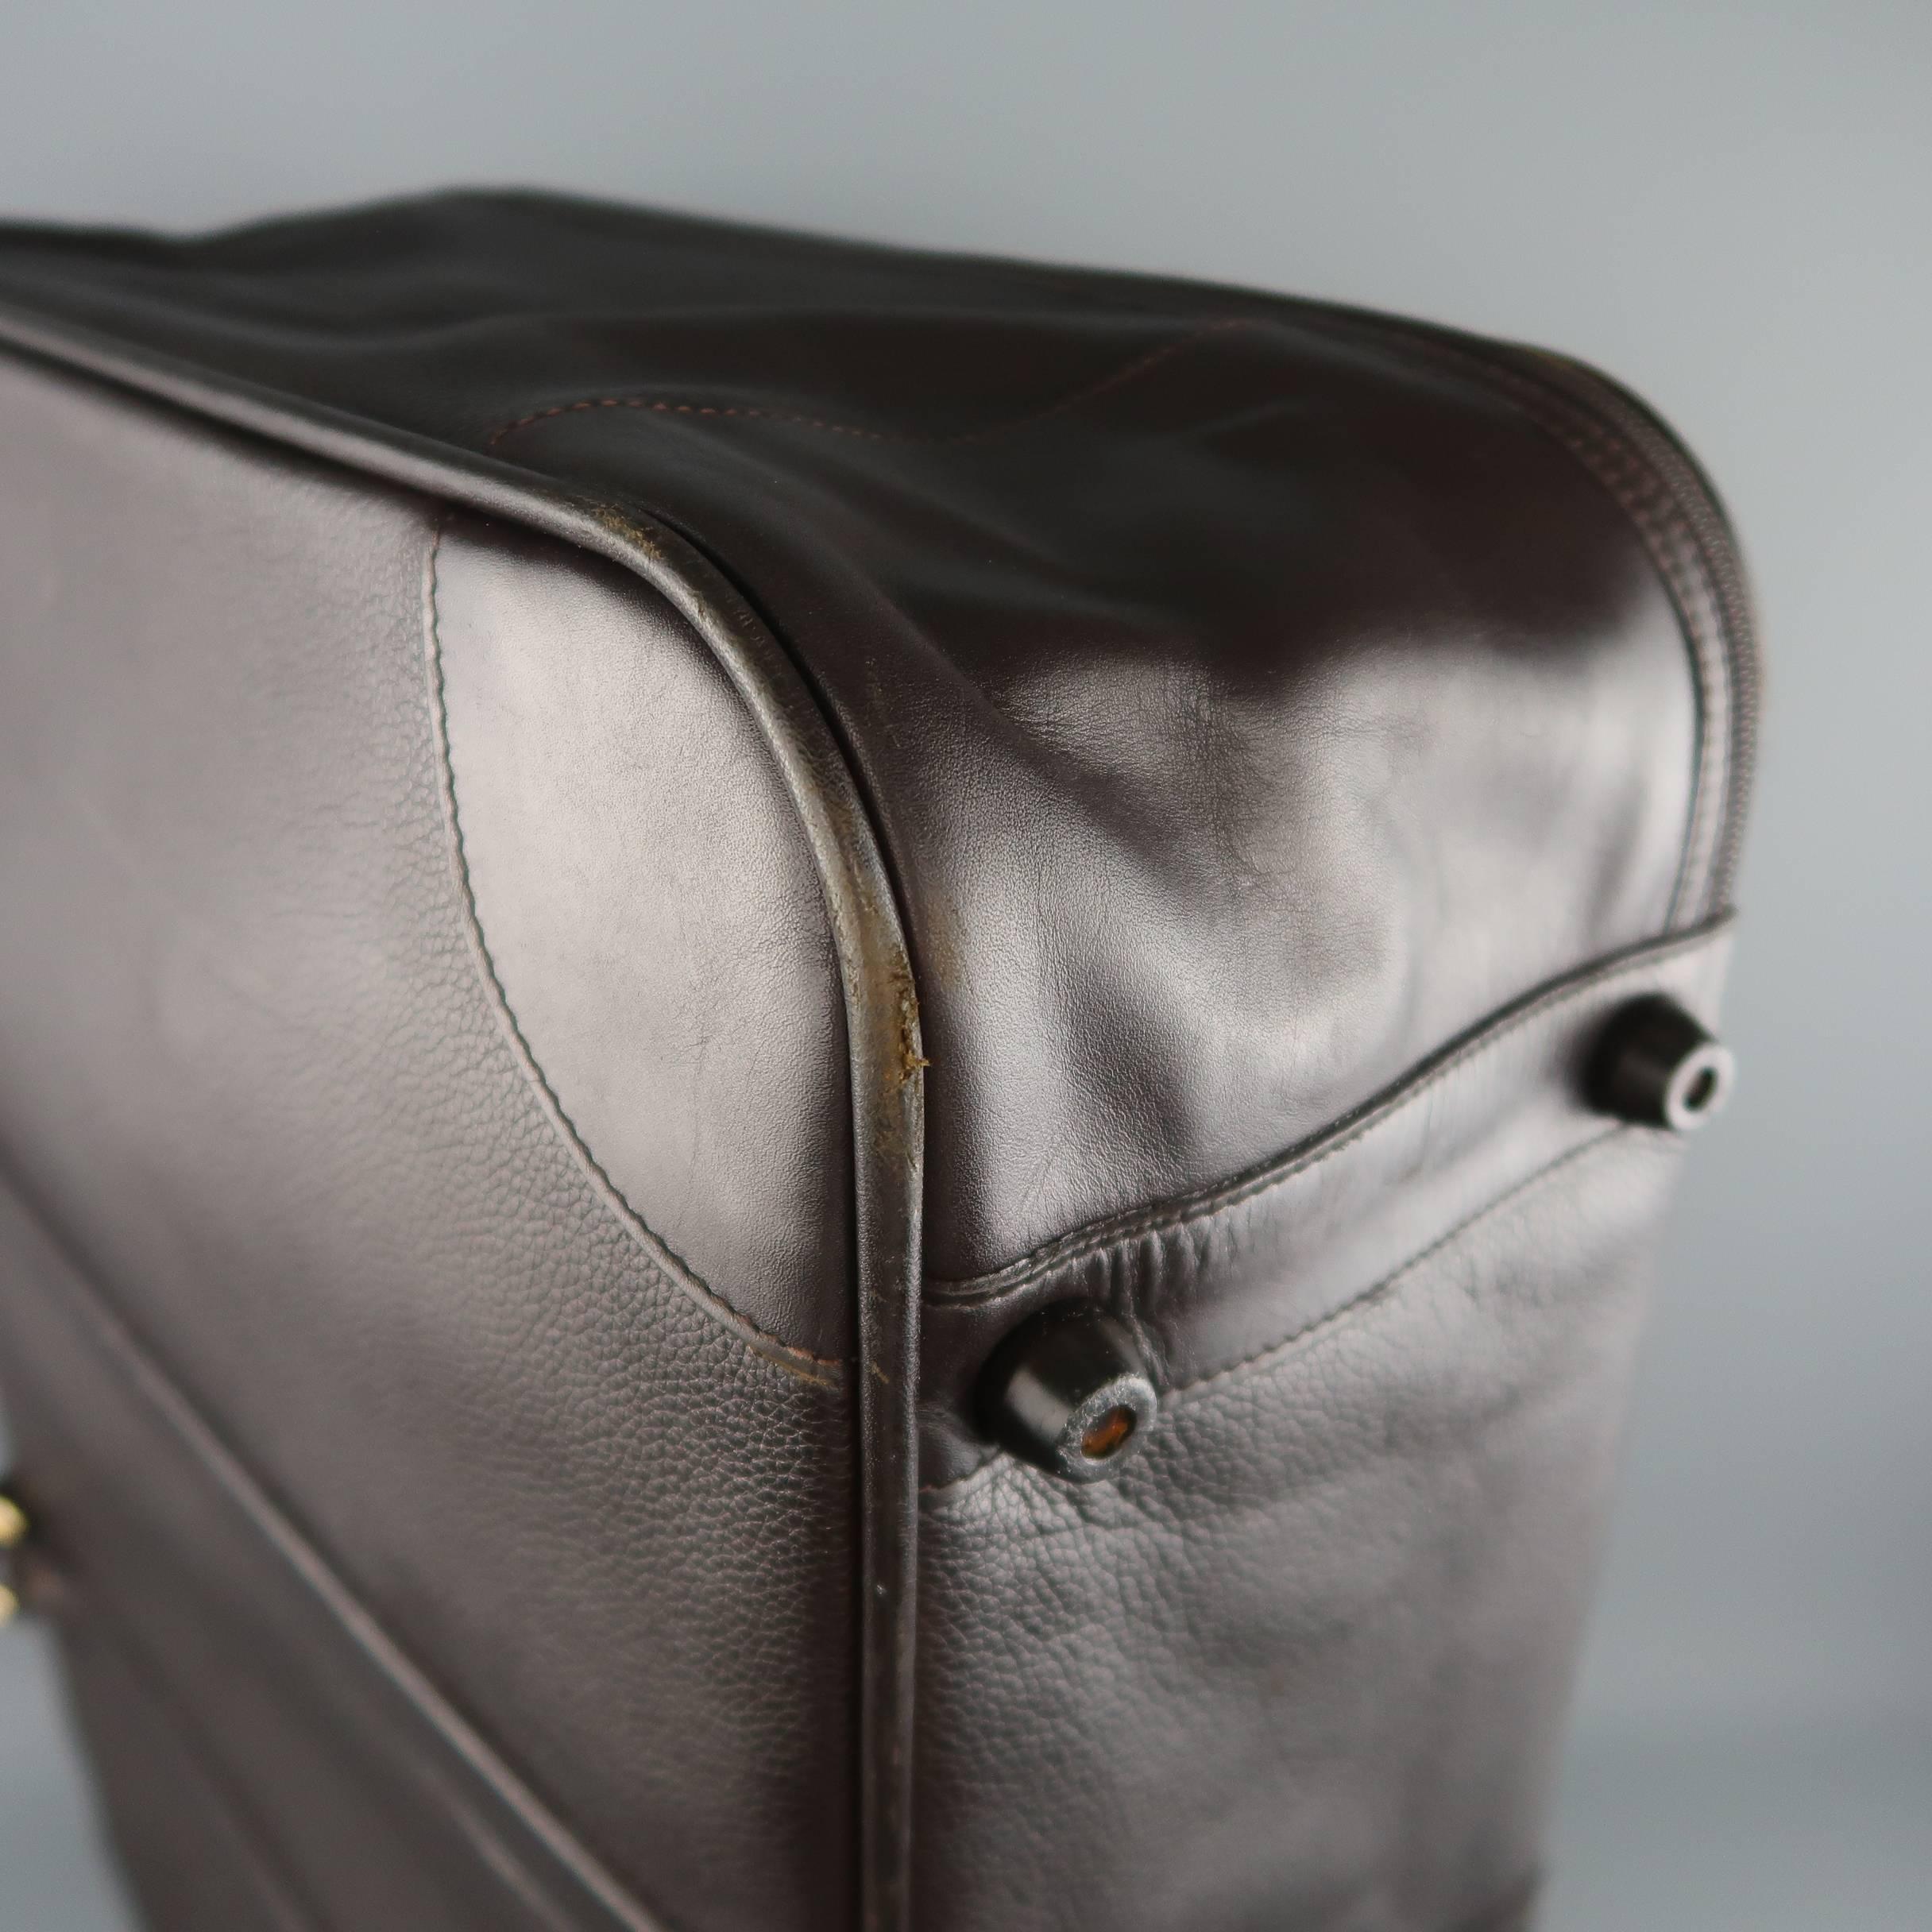 LONGCHAMP Dark Brown Leather Carry On Suitcase Travel Bag (Grau)